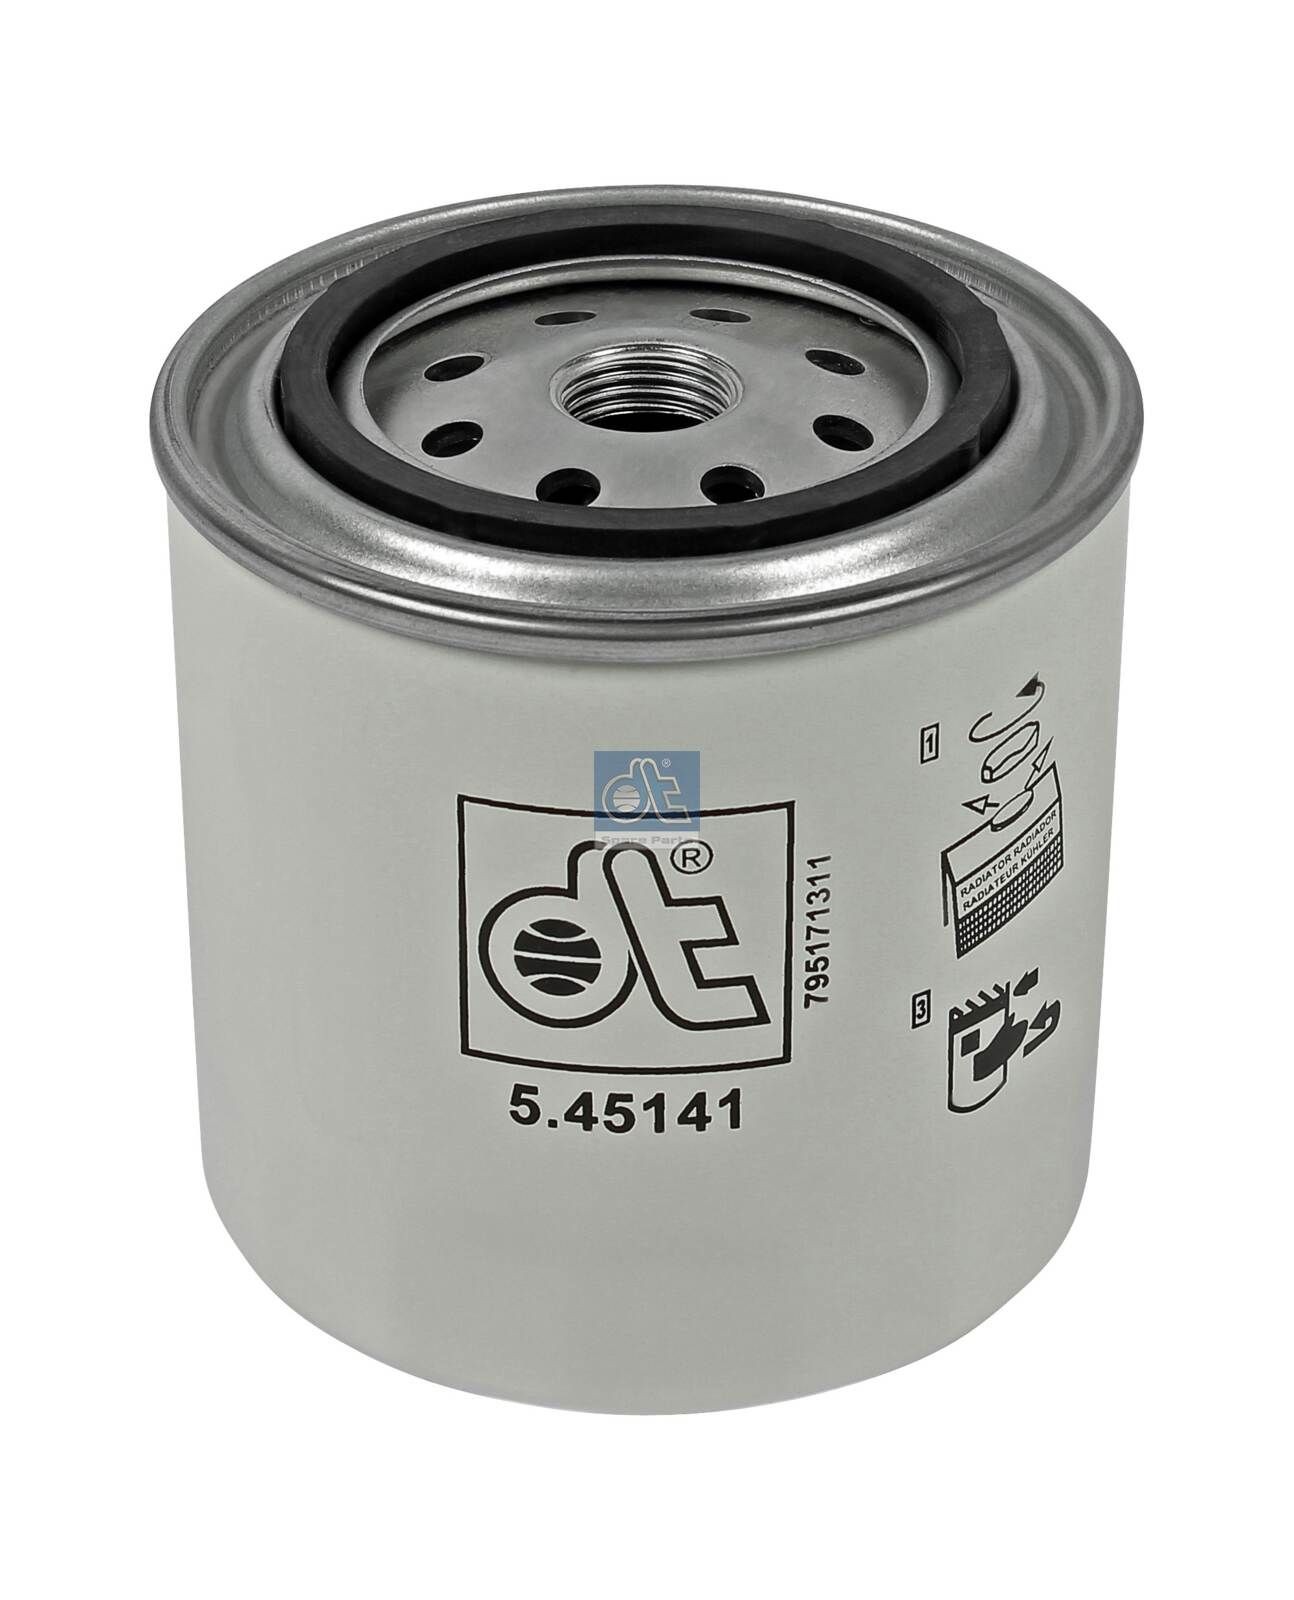 WA 940/1 DT Spare Parts 5.45141 Coolant Filter 402 9099